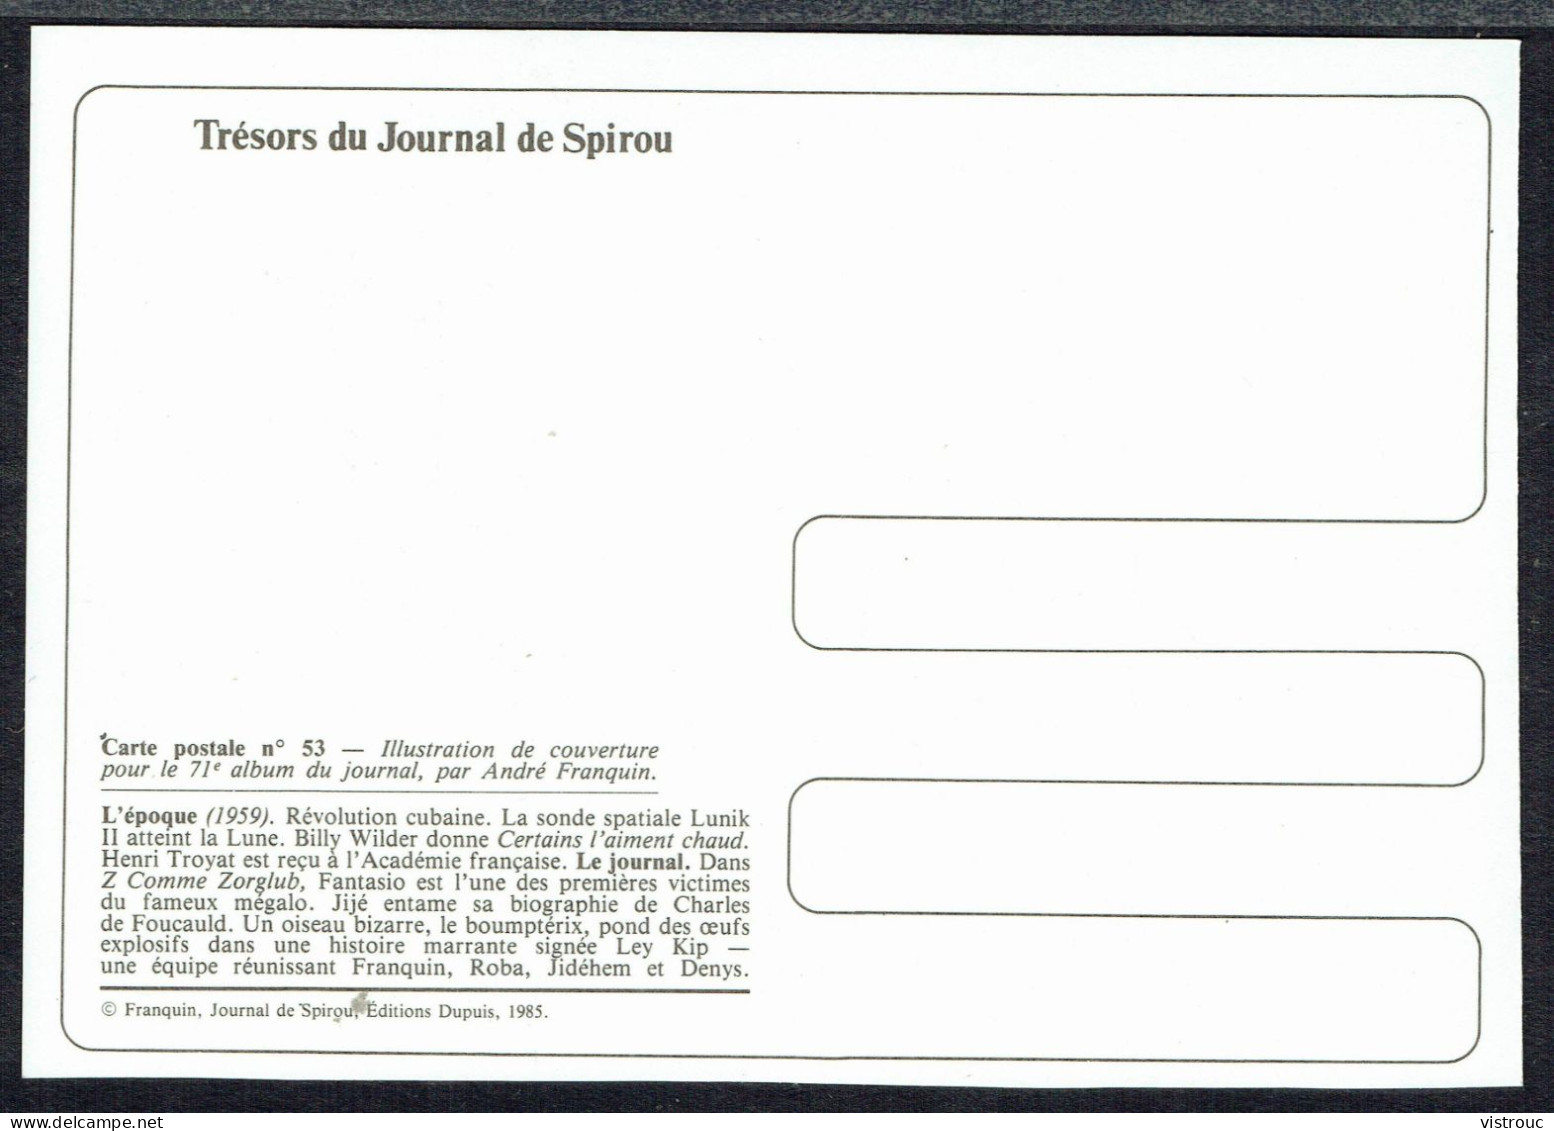 SPIROU - CP N° 53 : Illustration Couverture Album N° 71 De FRANQUIN - Non Circulé - Not Circulated - Ed. DUPUIS - 1985. - Comics